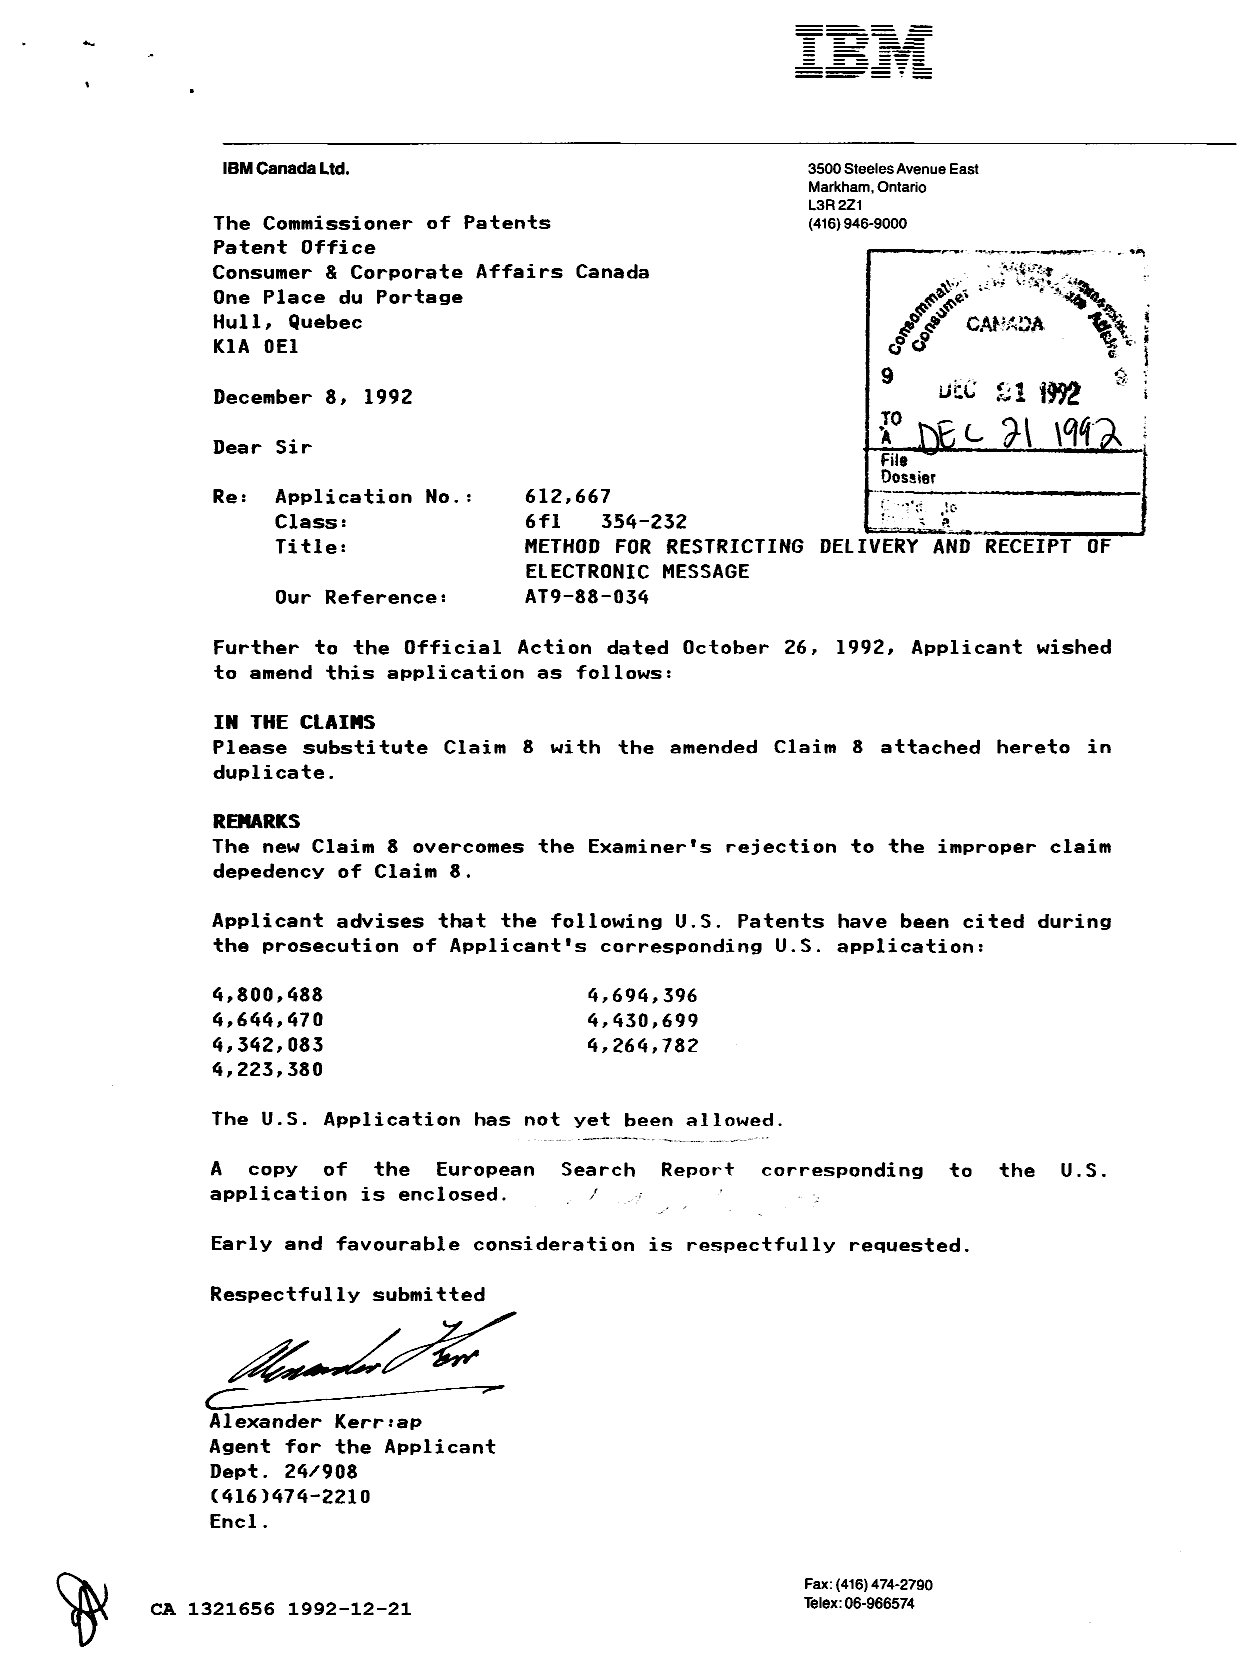 Canadian Patent Document 1321656. Prosecution Correspondence 19921221. Image 1 of 2